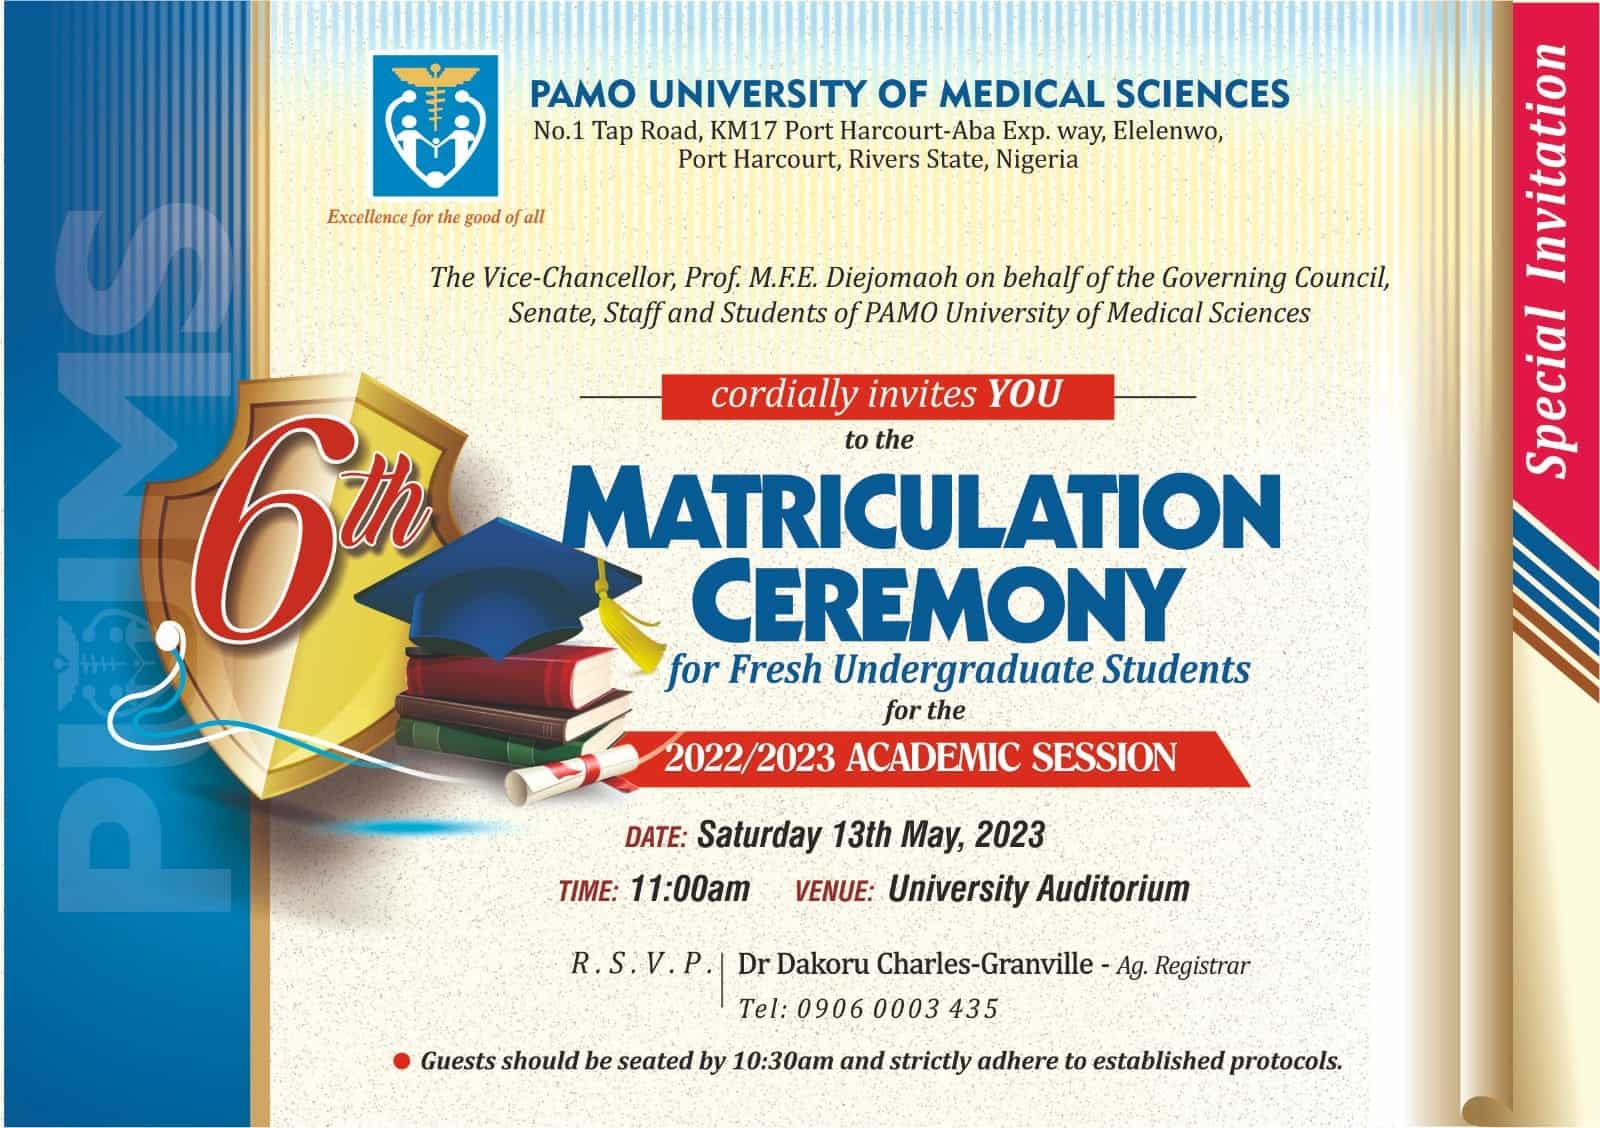 PAMO University of Medical Sciences Matriculation Ceremony